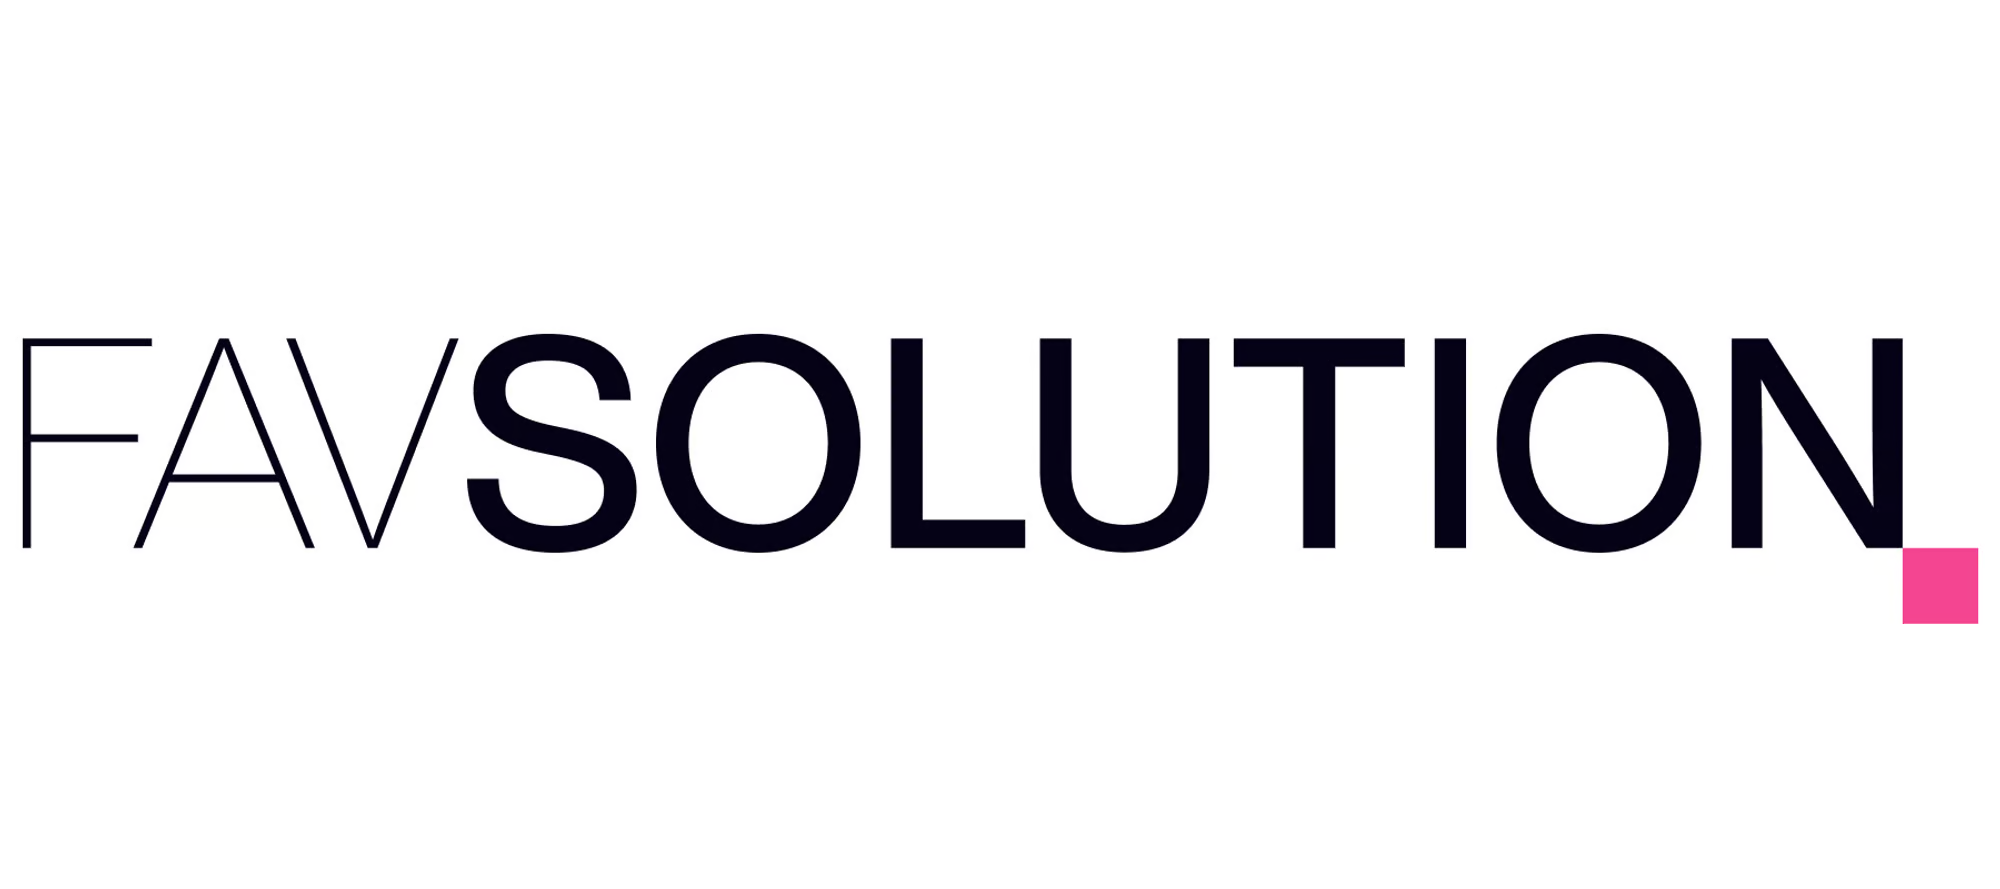 favsolution-logo